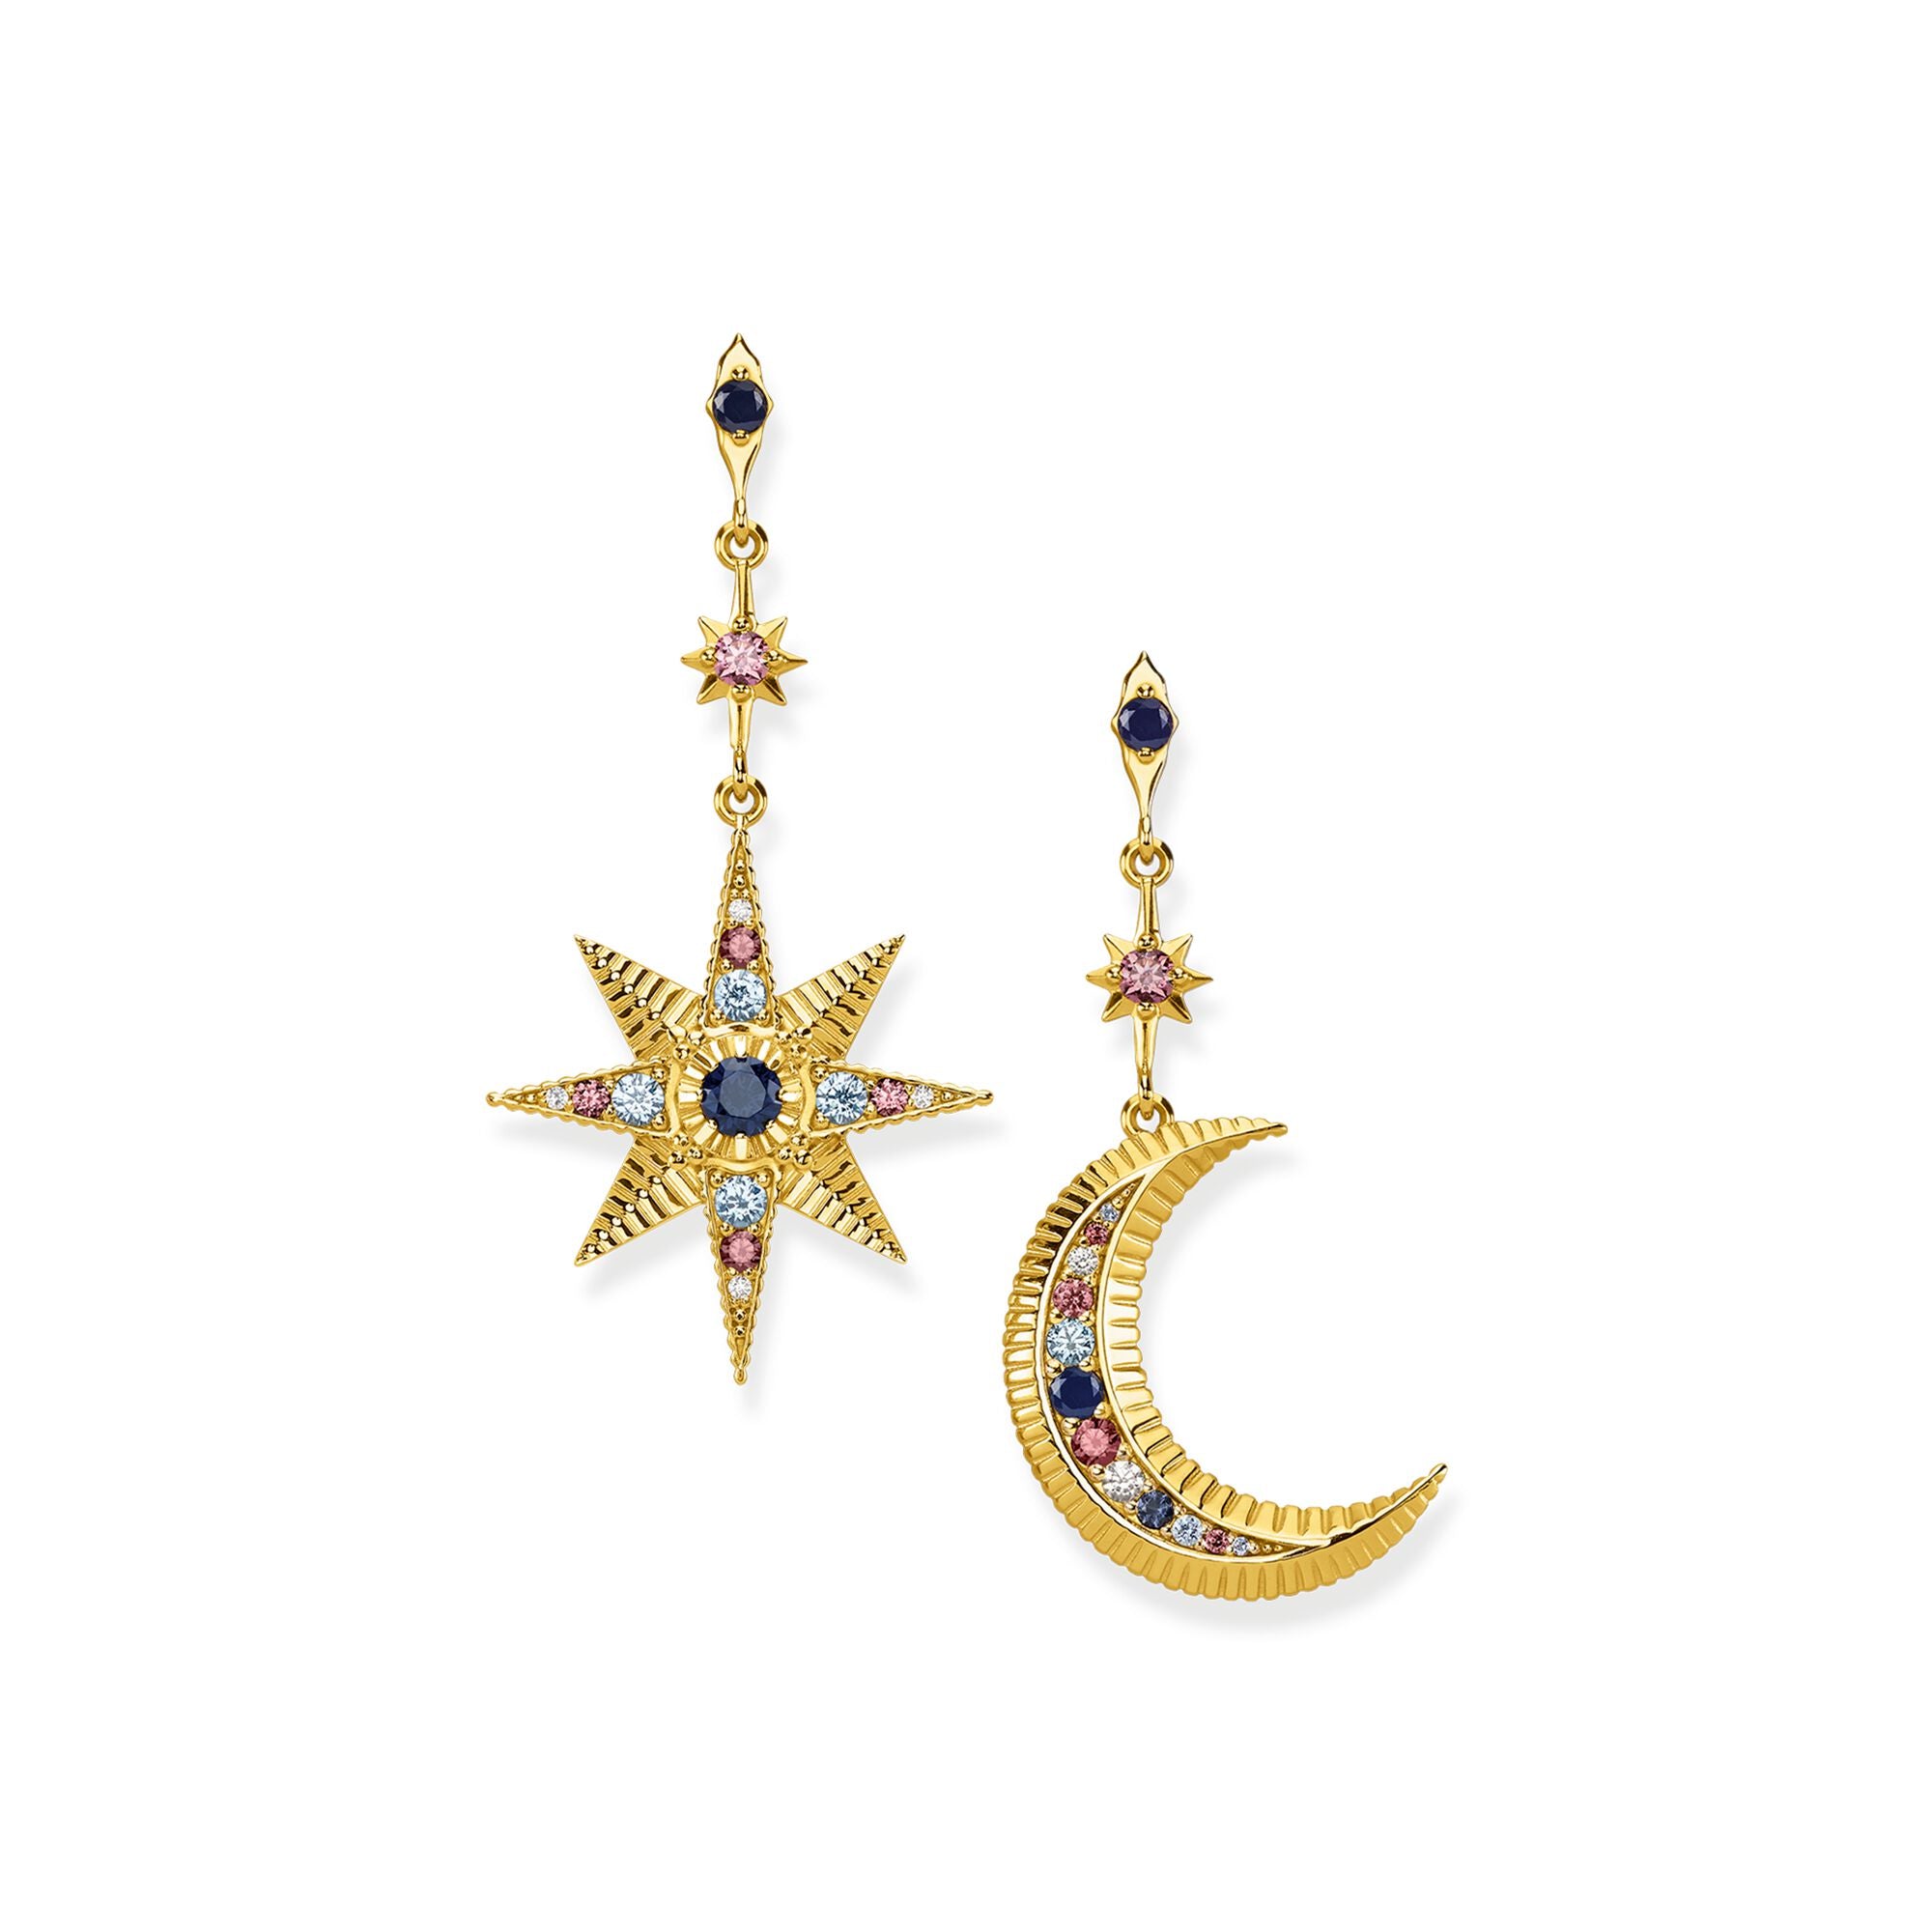 Thomas Sabo star and moon earrings